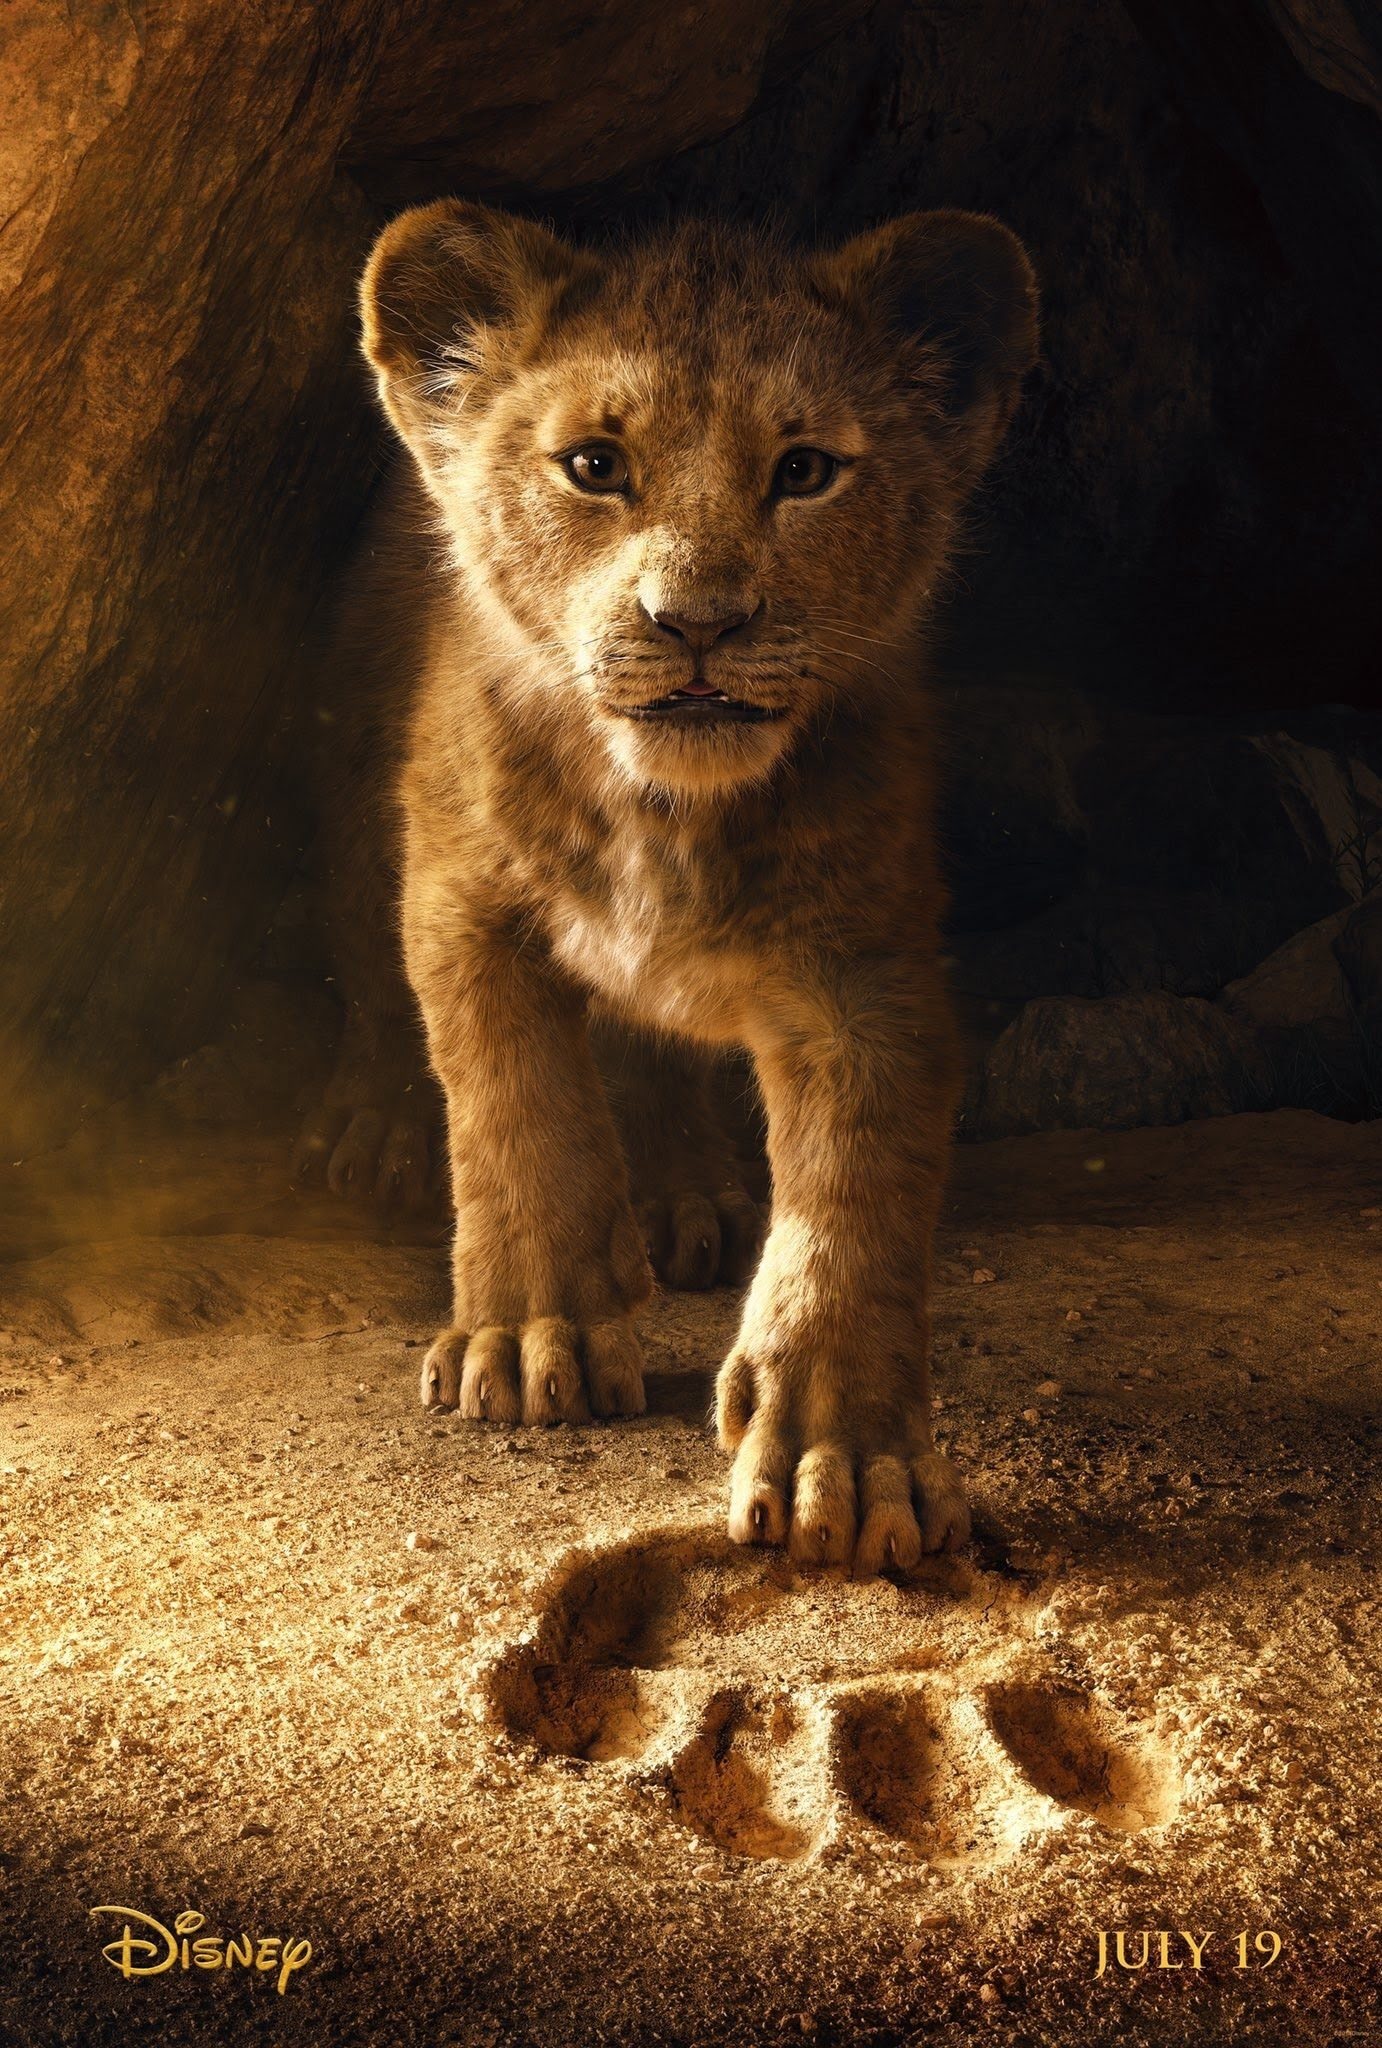 The Lion King ディズニー ルネサンスを代表する90年代の人気アニメを ザ ジャングル ブック のジョン ファヴロー監督を起用し 実写映画化した話題作 ザ ライオン キング の予告編を初公開 Cia Movie News